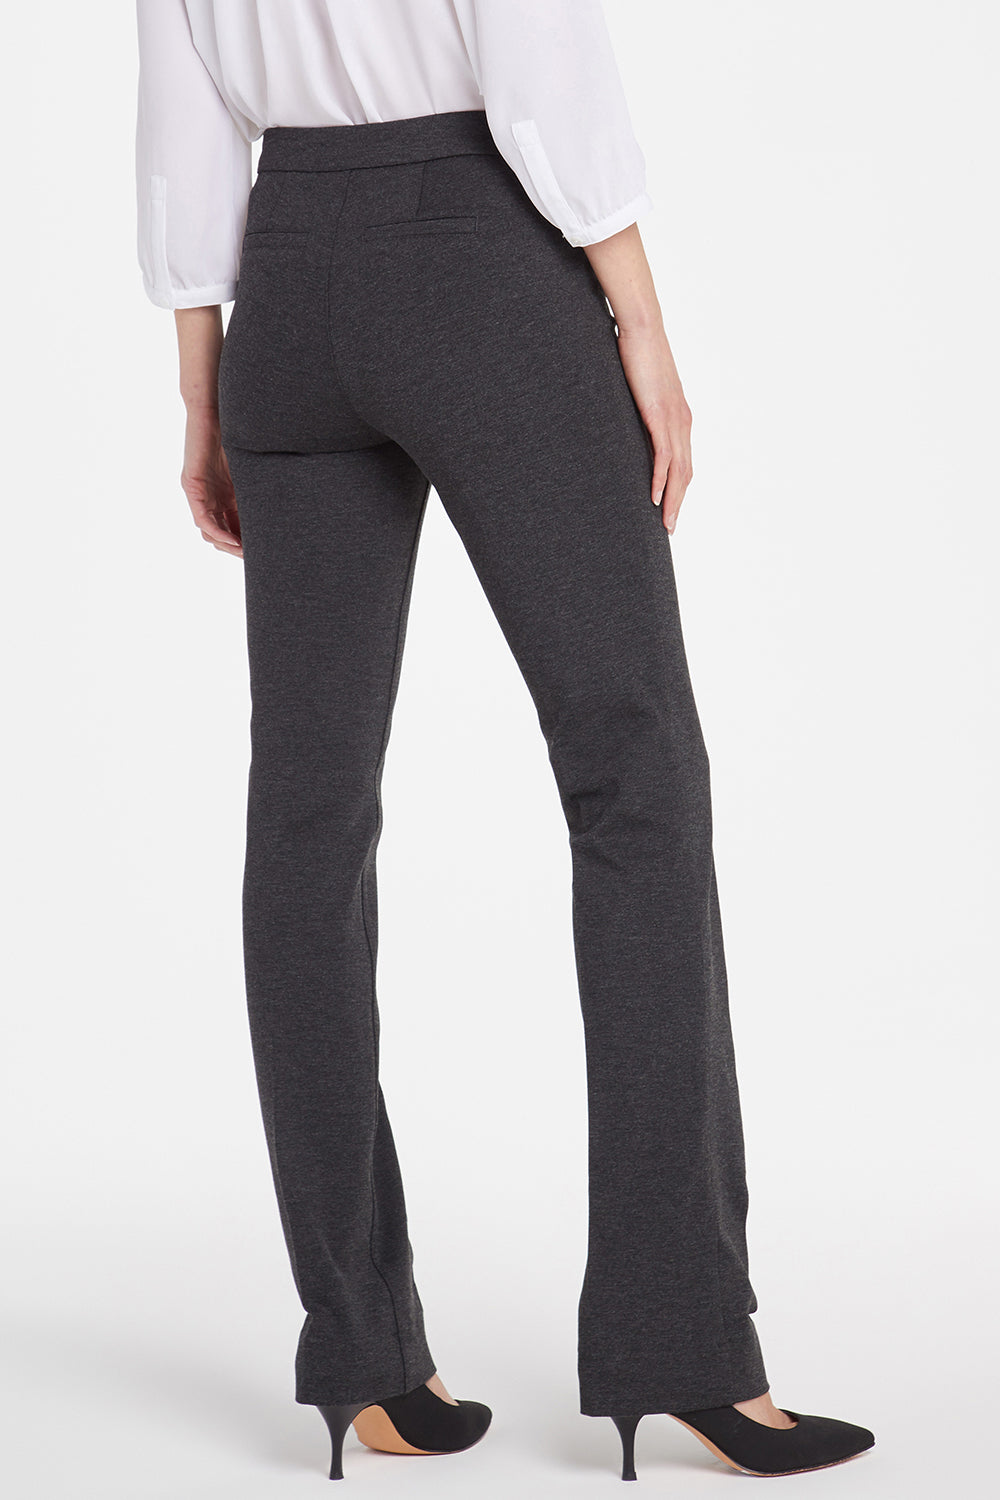 Slim Trouser Pants In Petite In Ponte Knit - Black Black | NYDJ